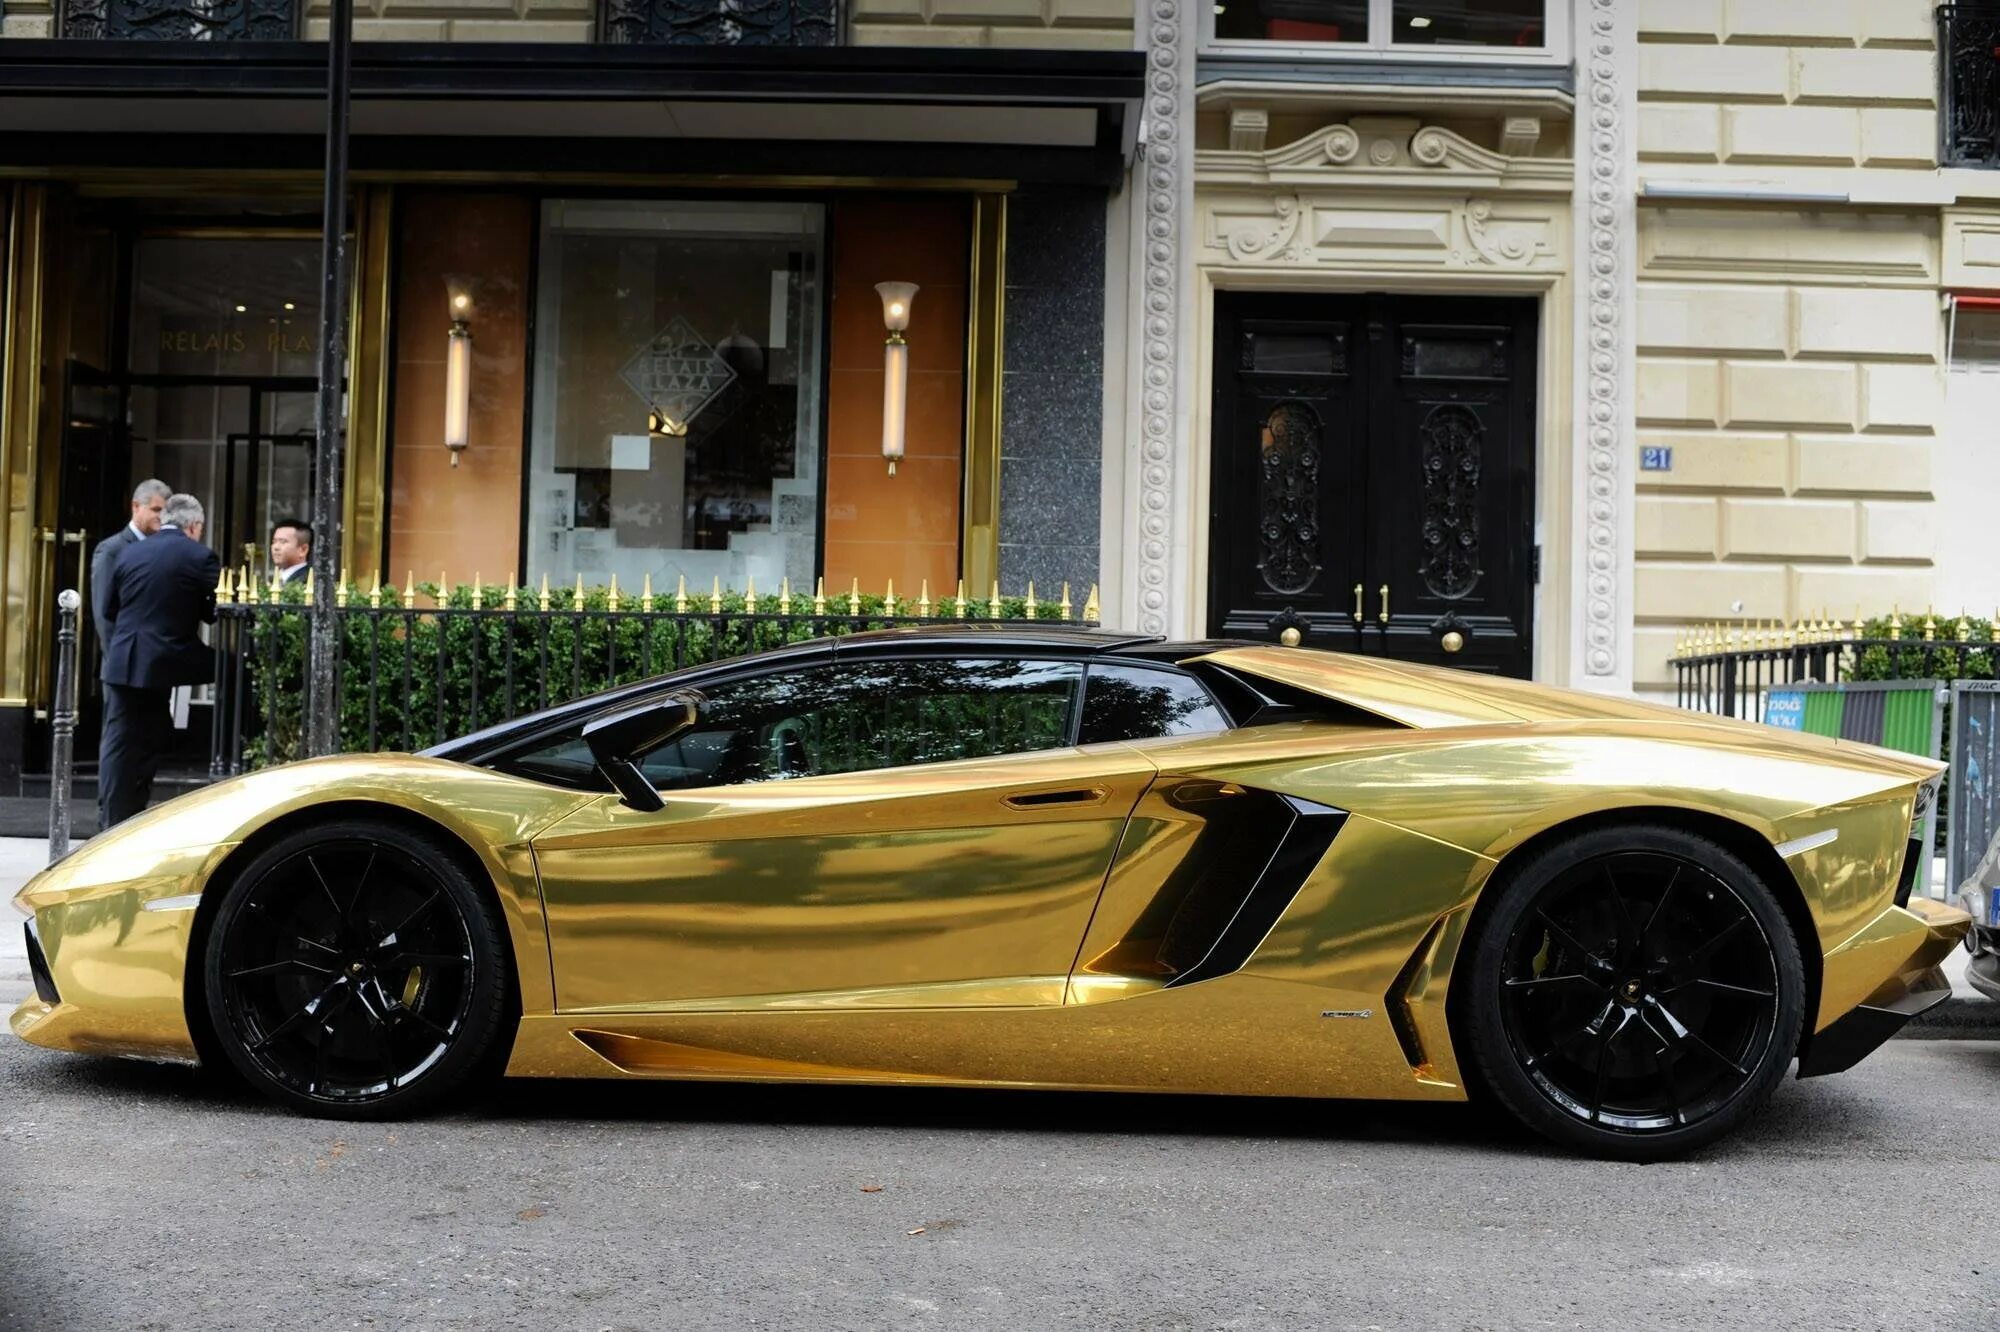 Lamborghini Aventador lp700-4 Золотая. Золотой Lamborghini авентадор. Ламборджини авентадор Золотая Дубай. Ламборгини авентадор шейха Золотая. The most expensive car